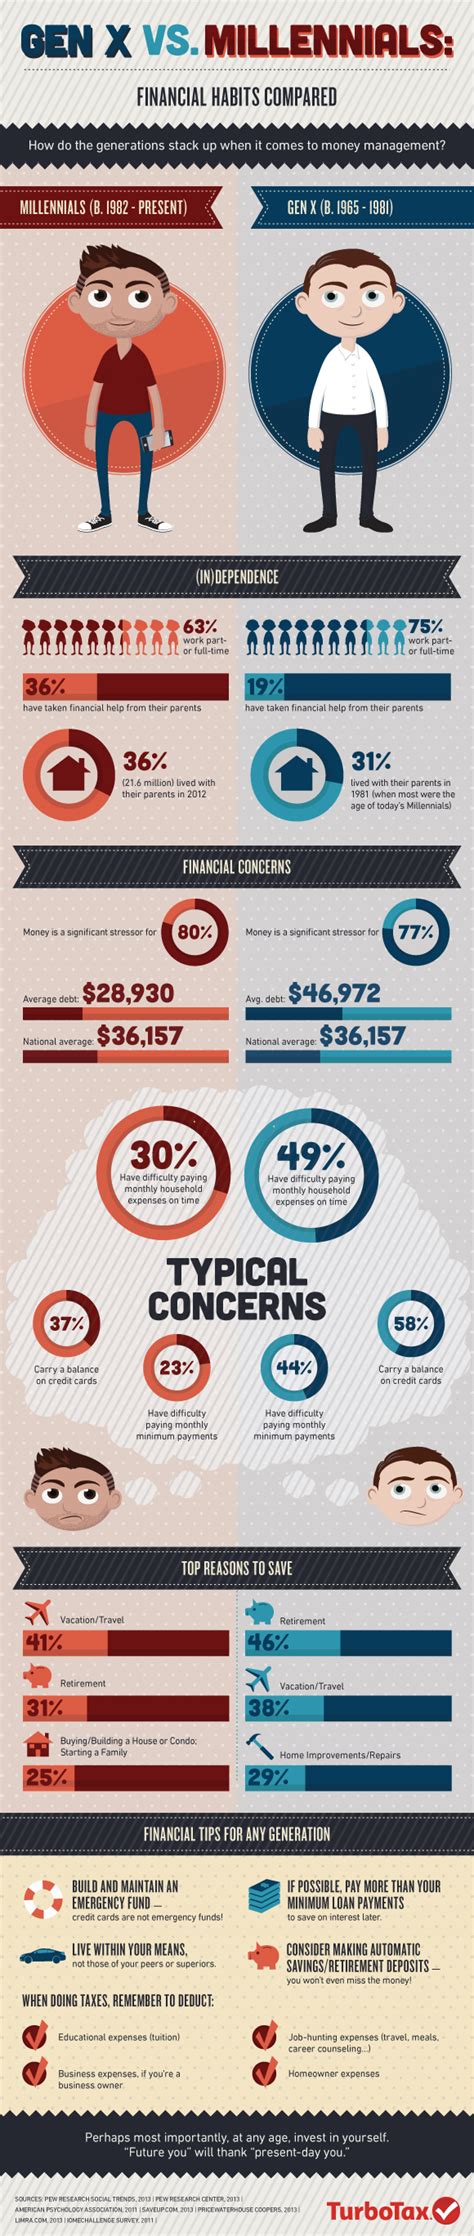 Gen X Vs Millennials Financial Habits Compared Infographic The